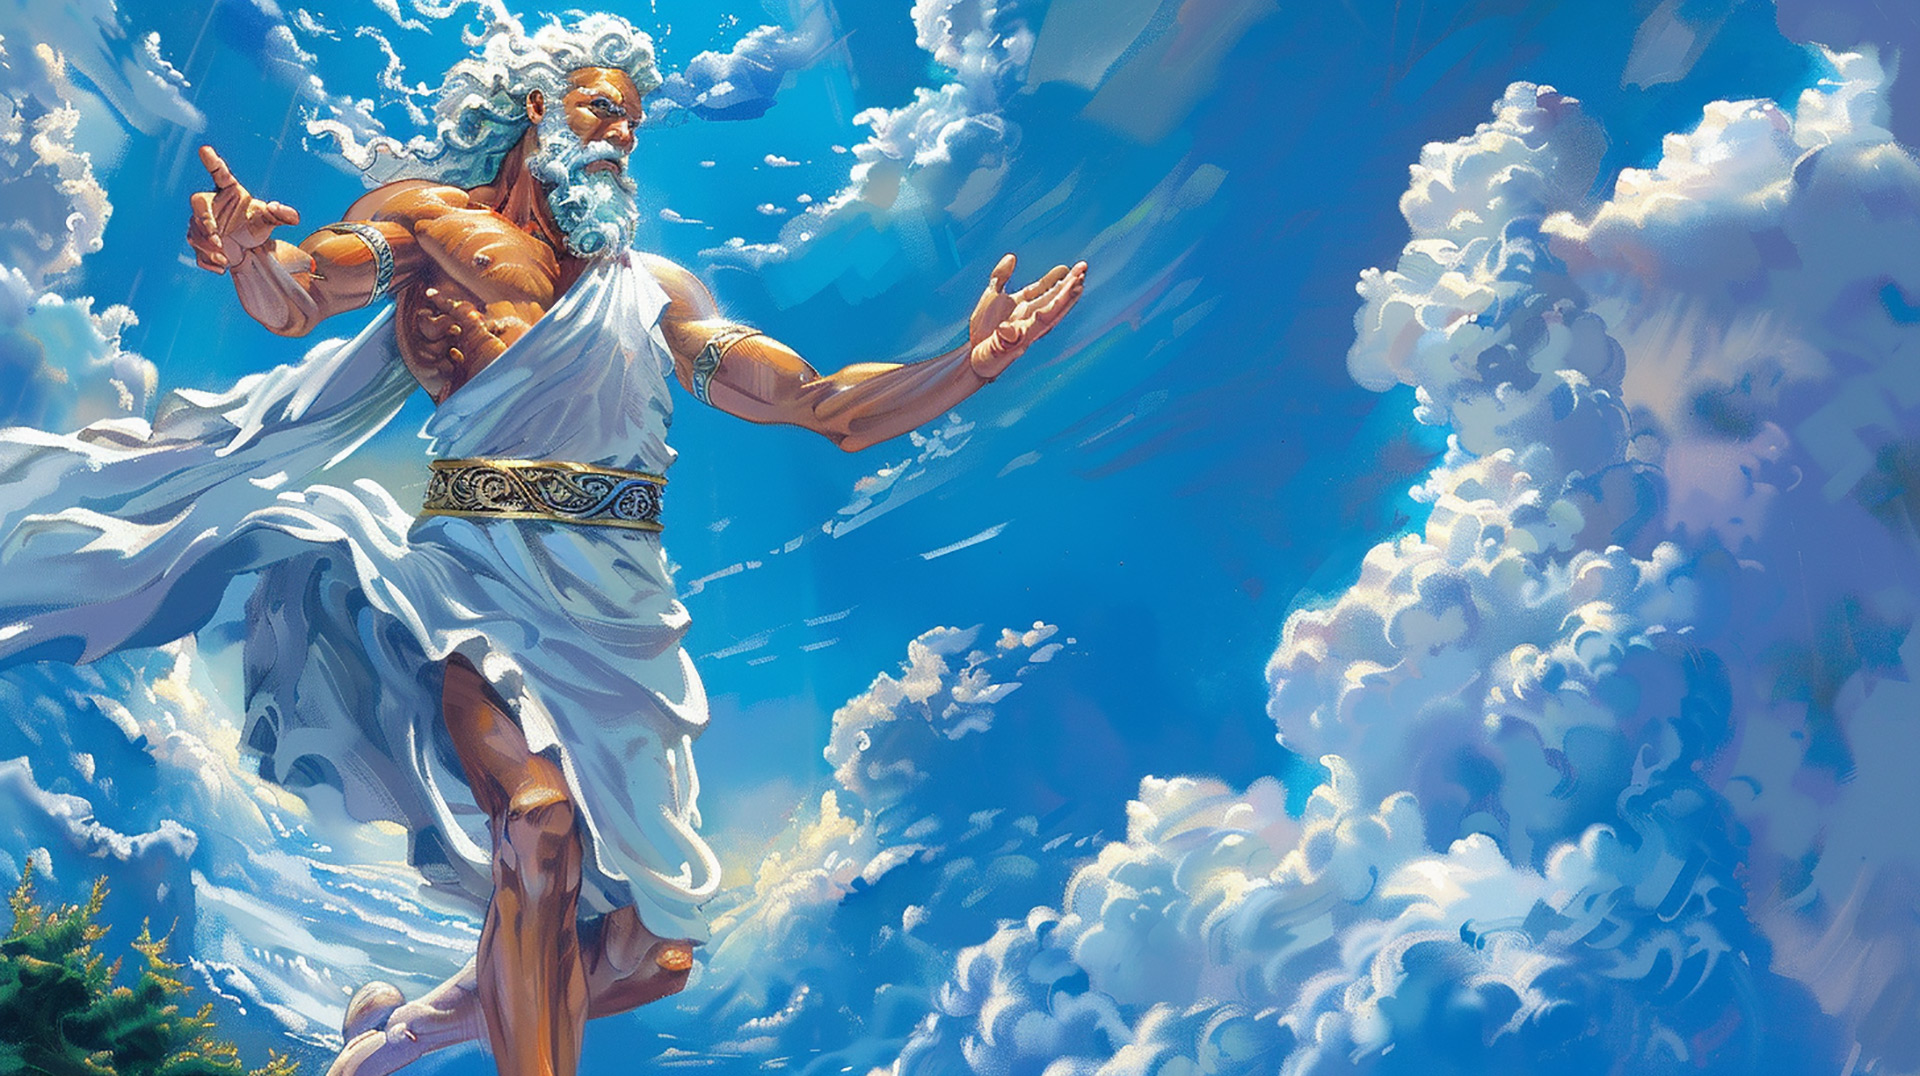 Poseidon's Realm: HD Image Depicting the God of the Sea